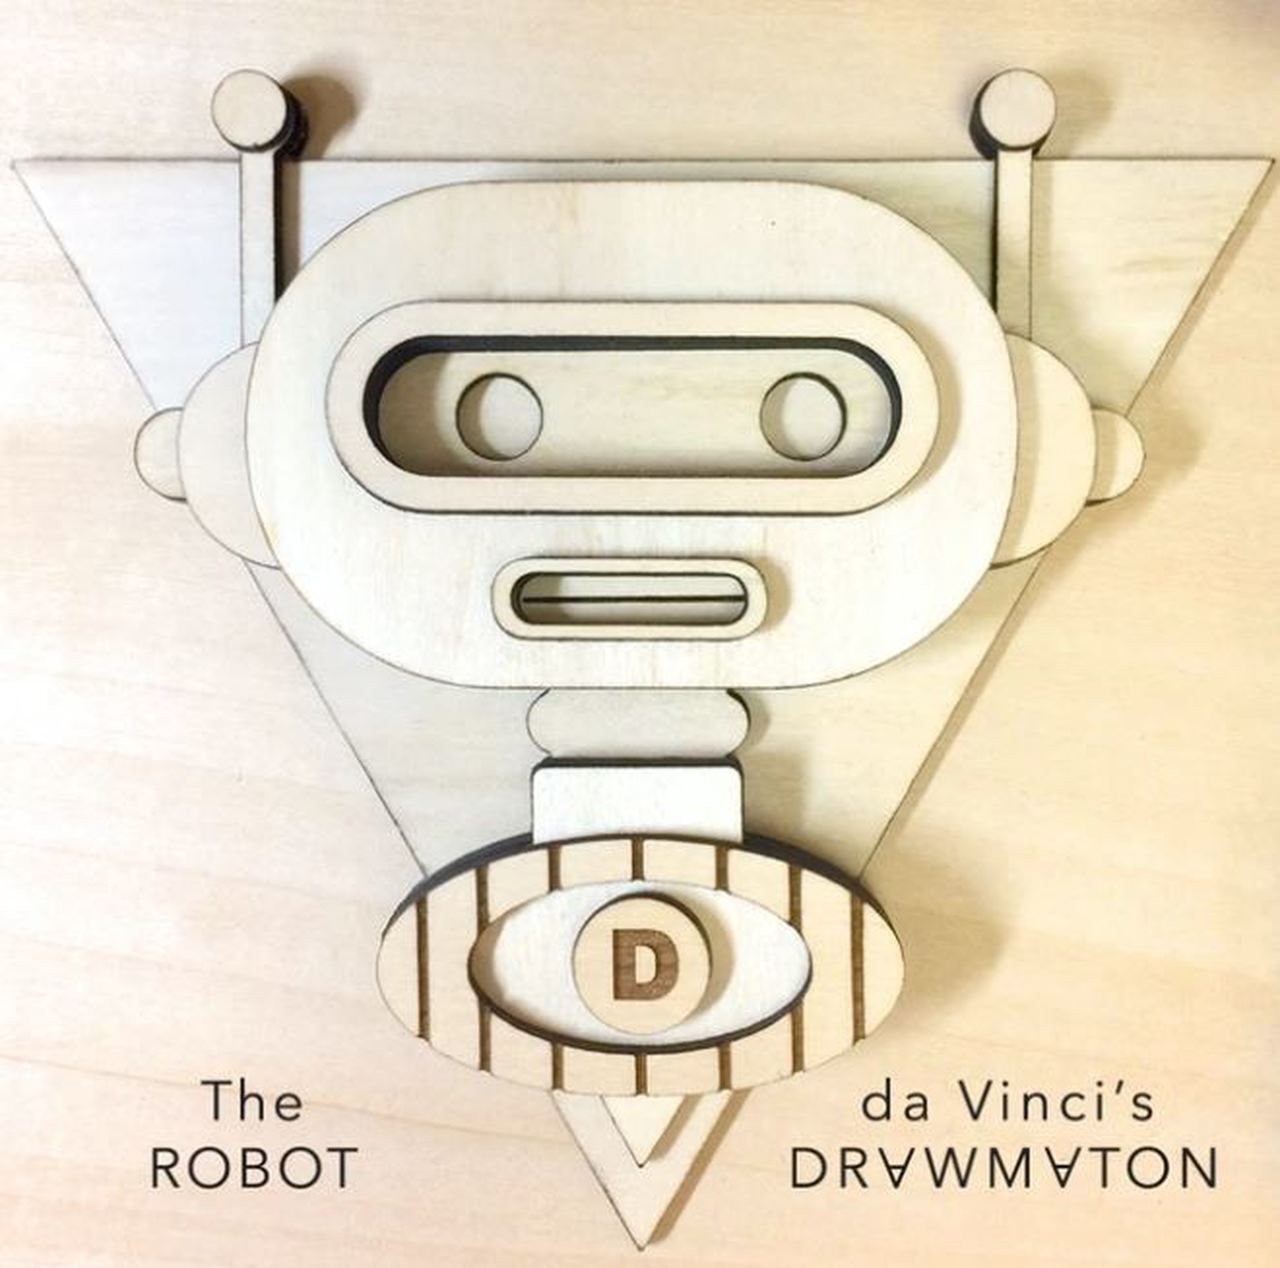 Da Vinci Drawmaton - the robot